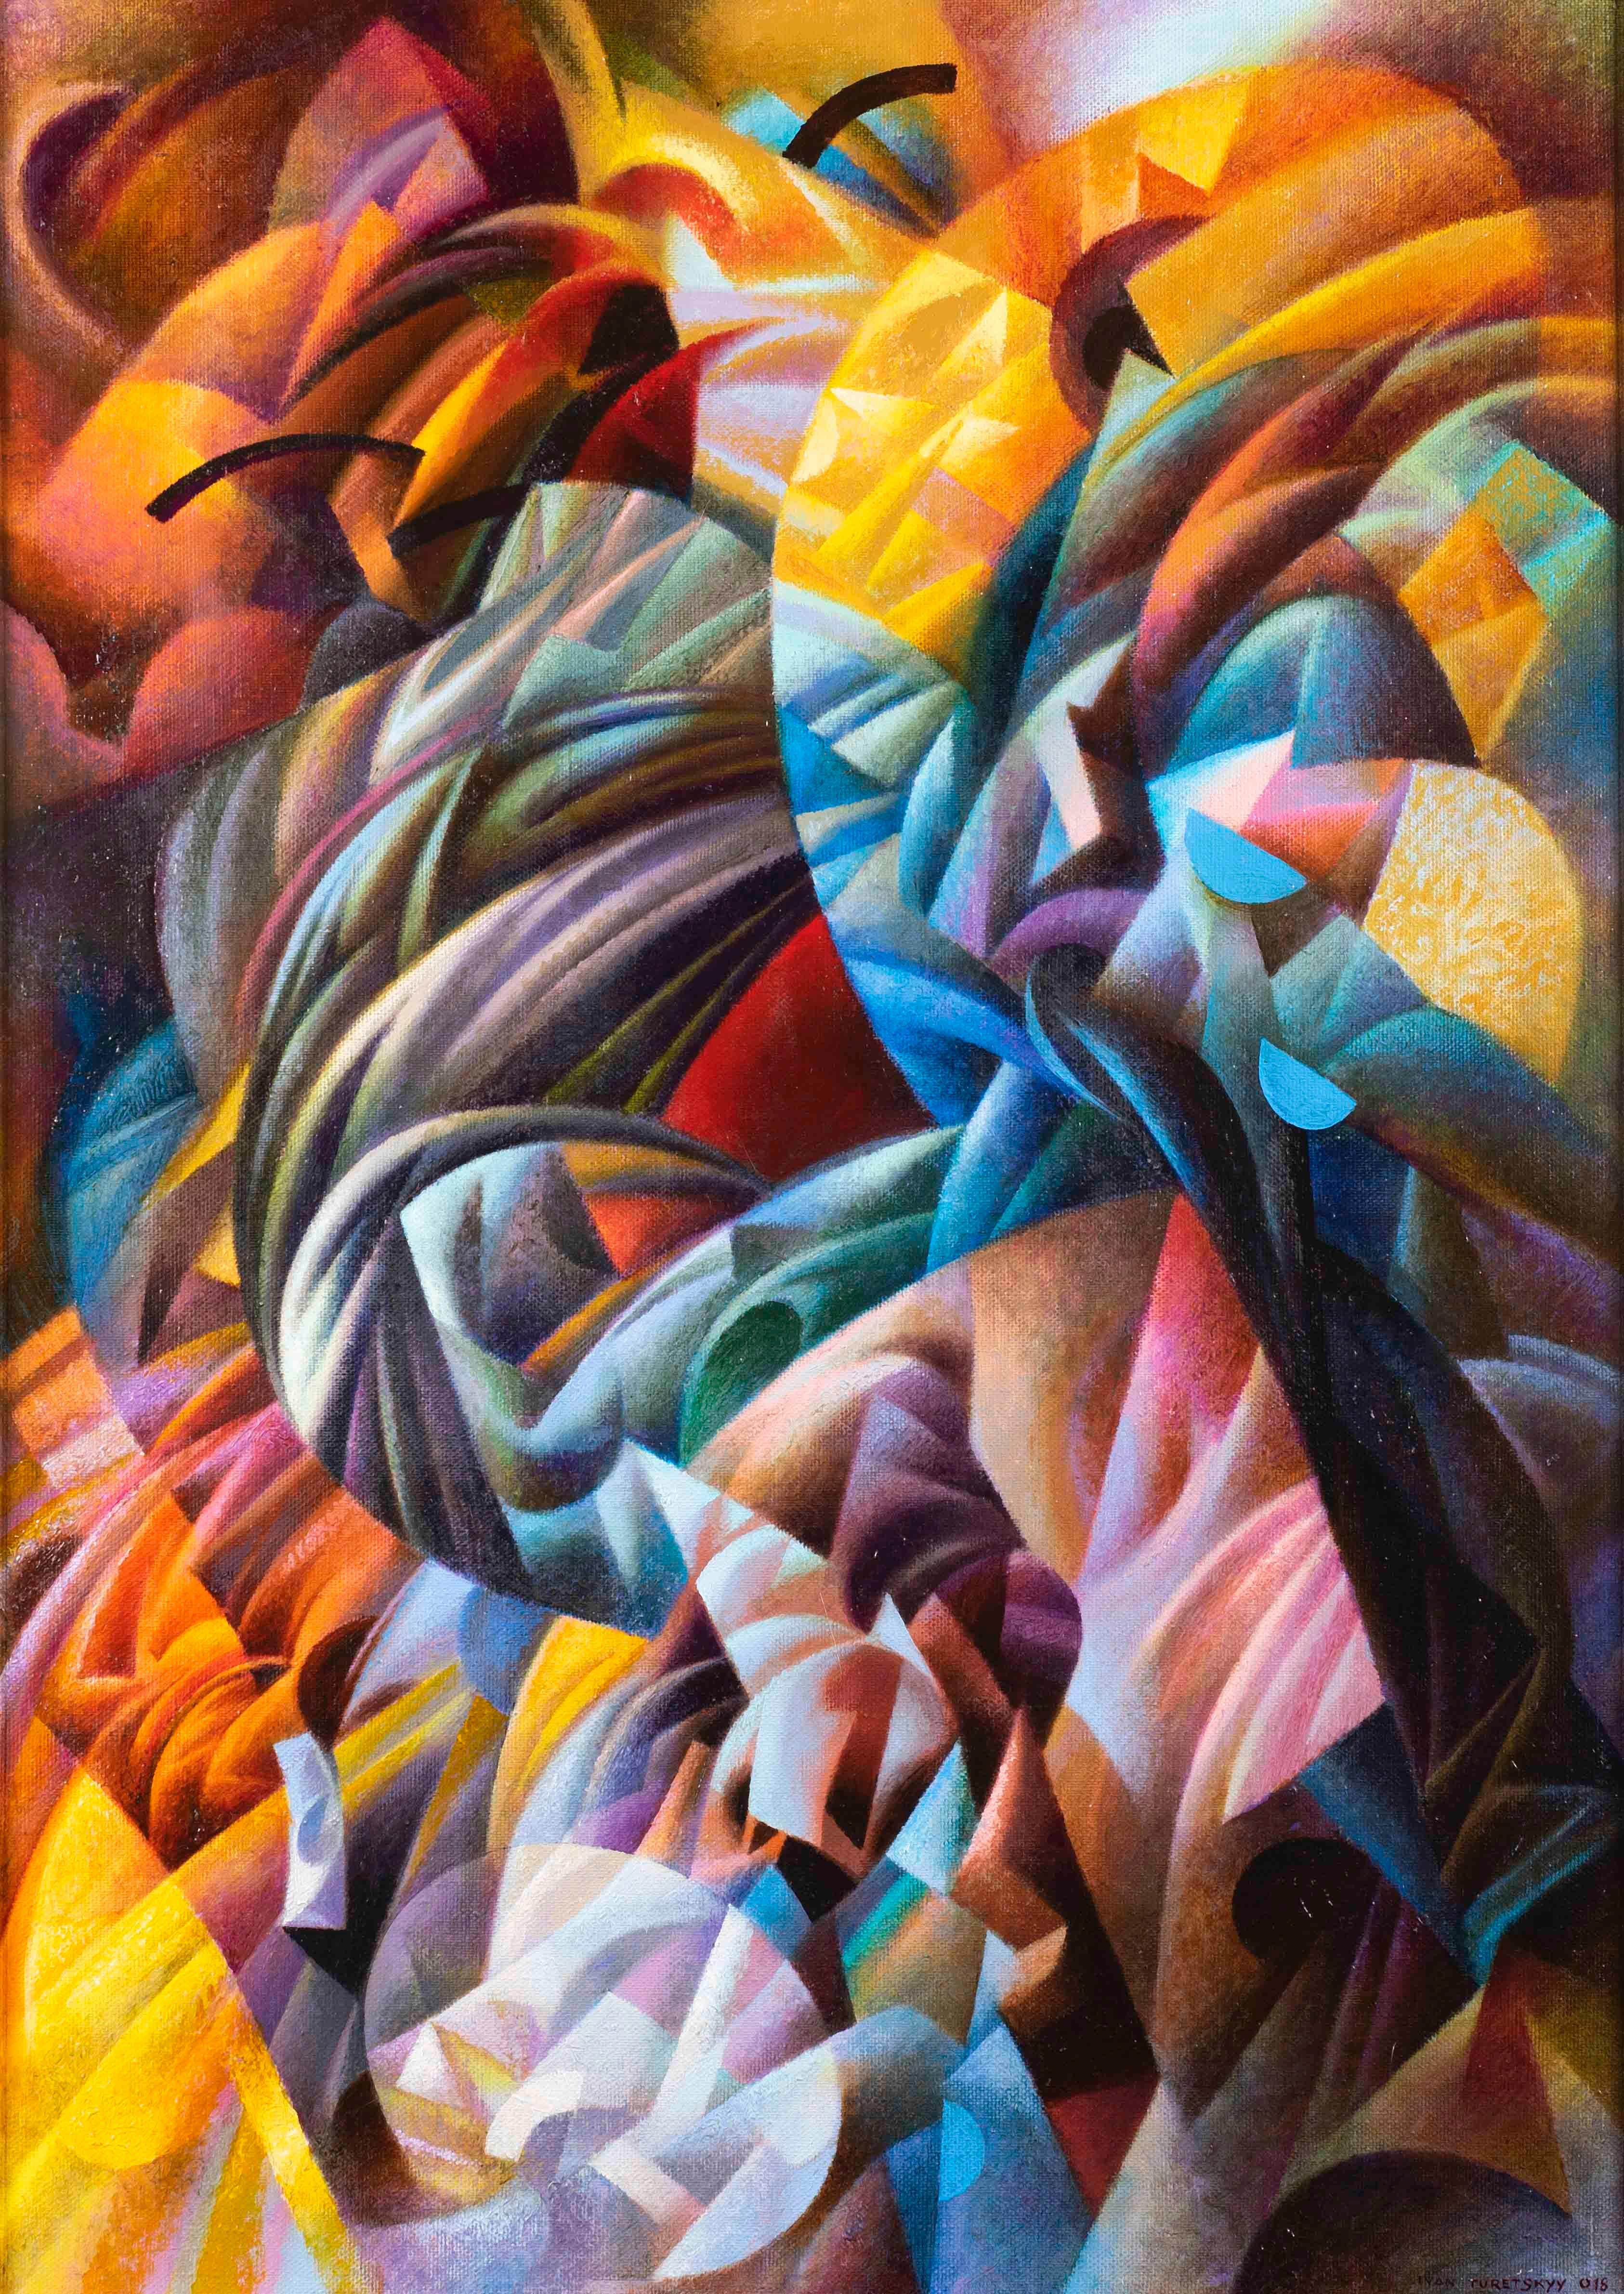 Ivan Turetskyy - Euphoria, painting, contemporary, futurist, abstract, movement